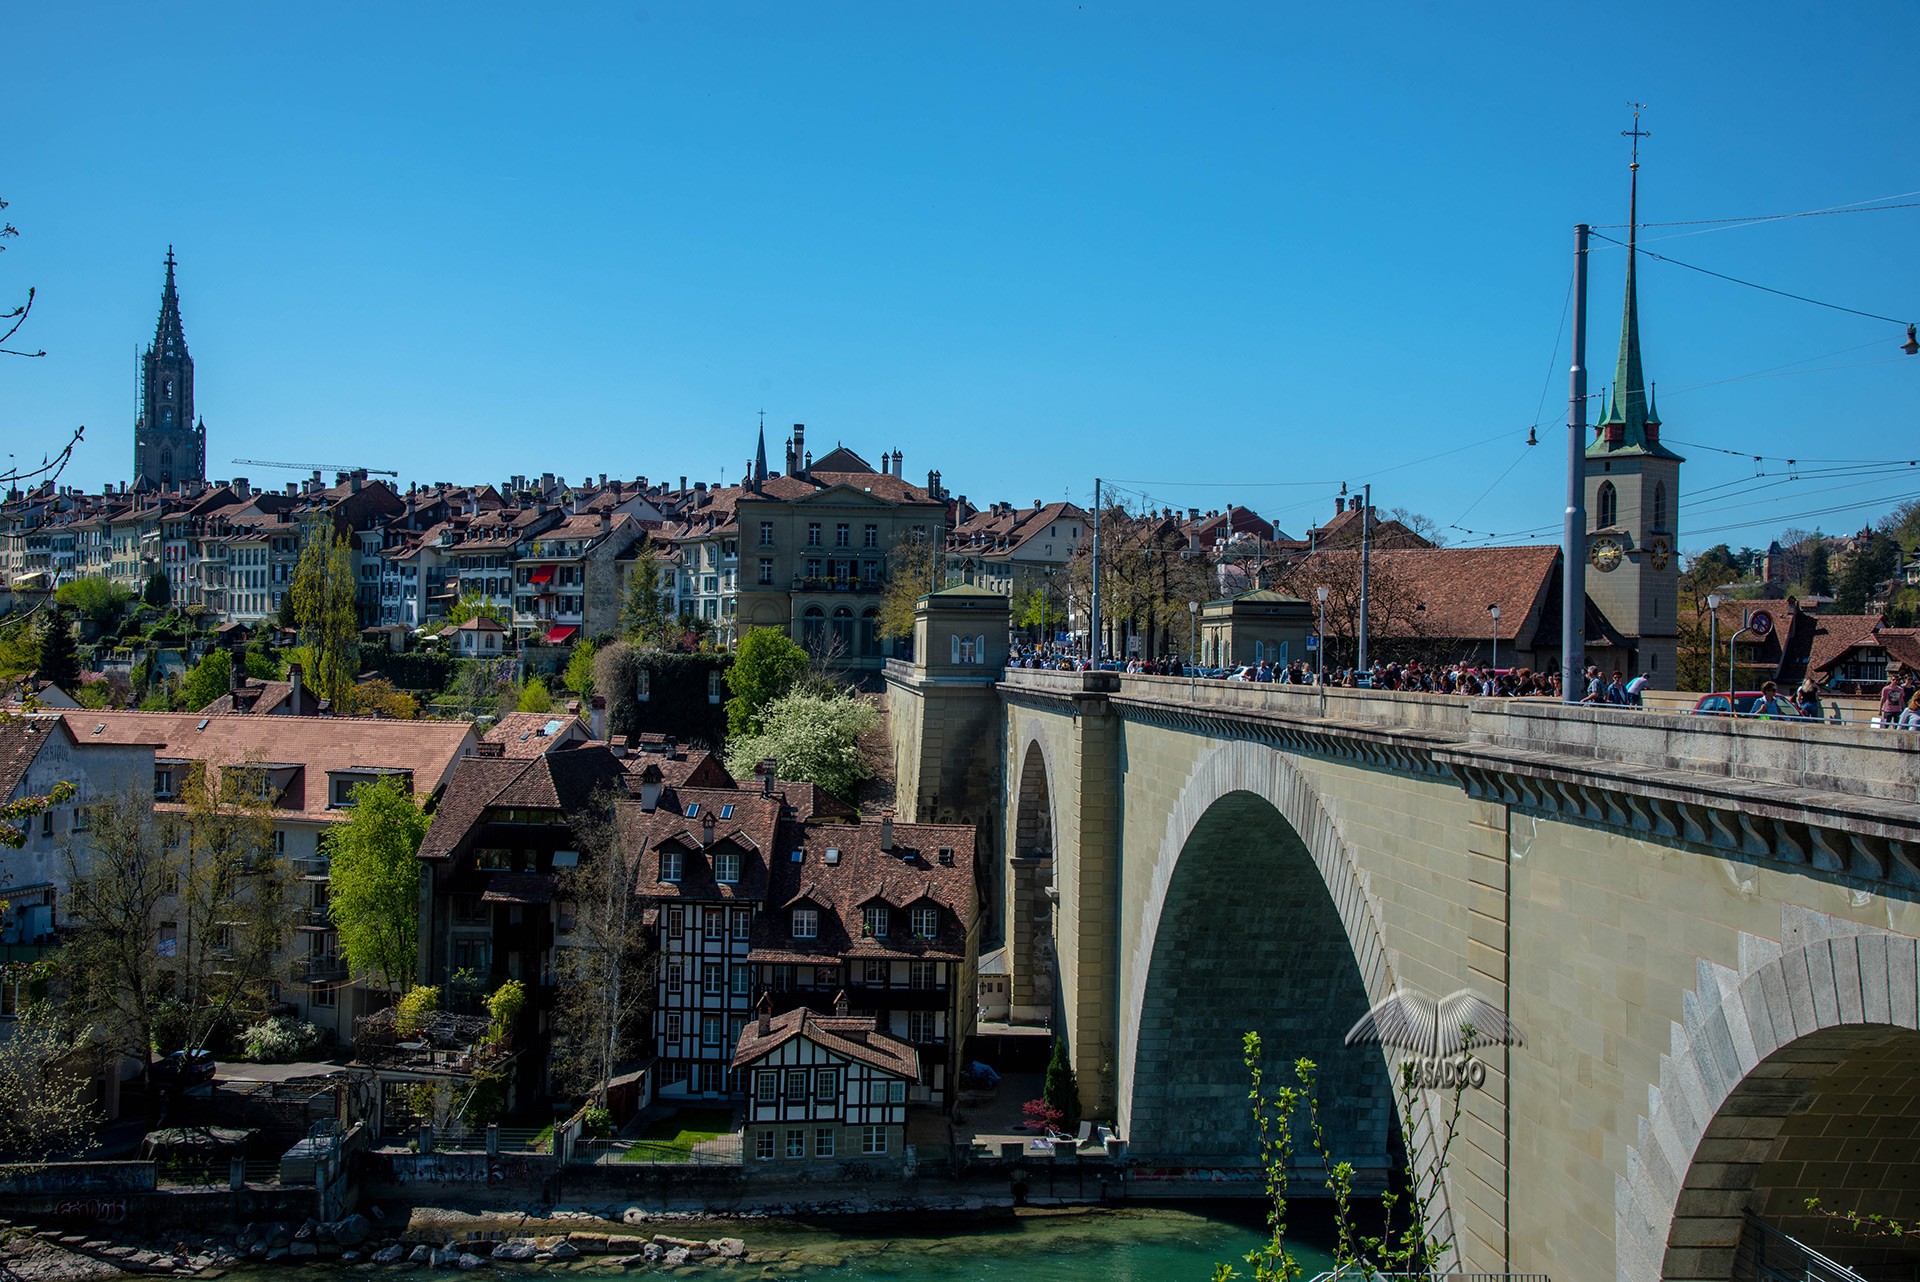 Nydegg köprüsü, Aare-Bern-İsviçre nehri